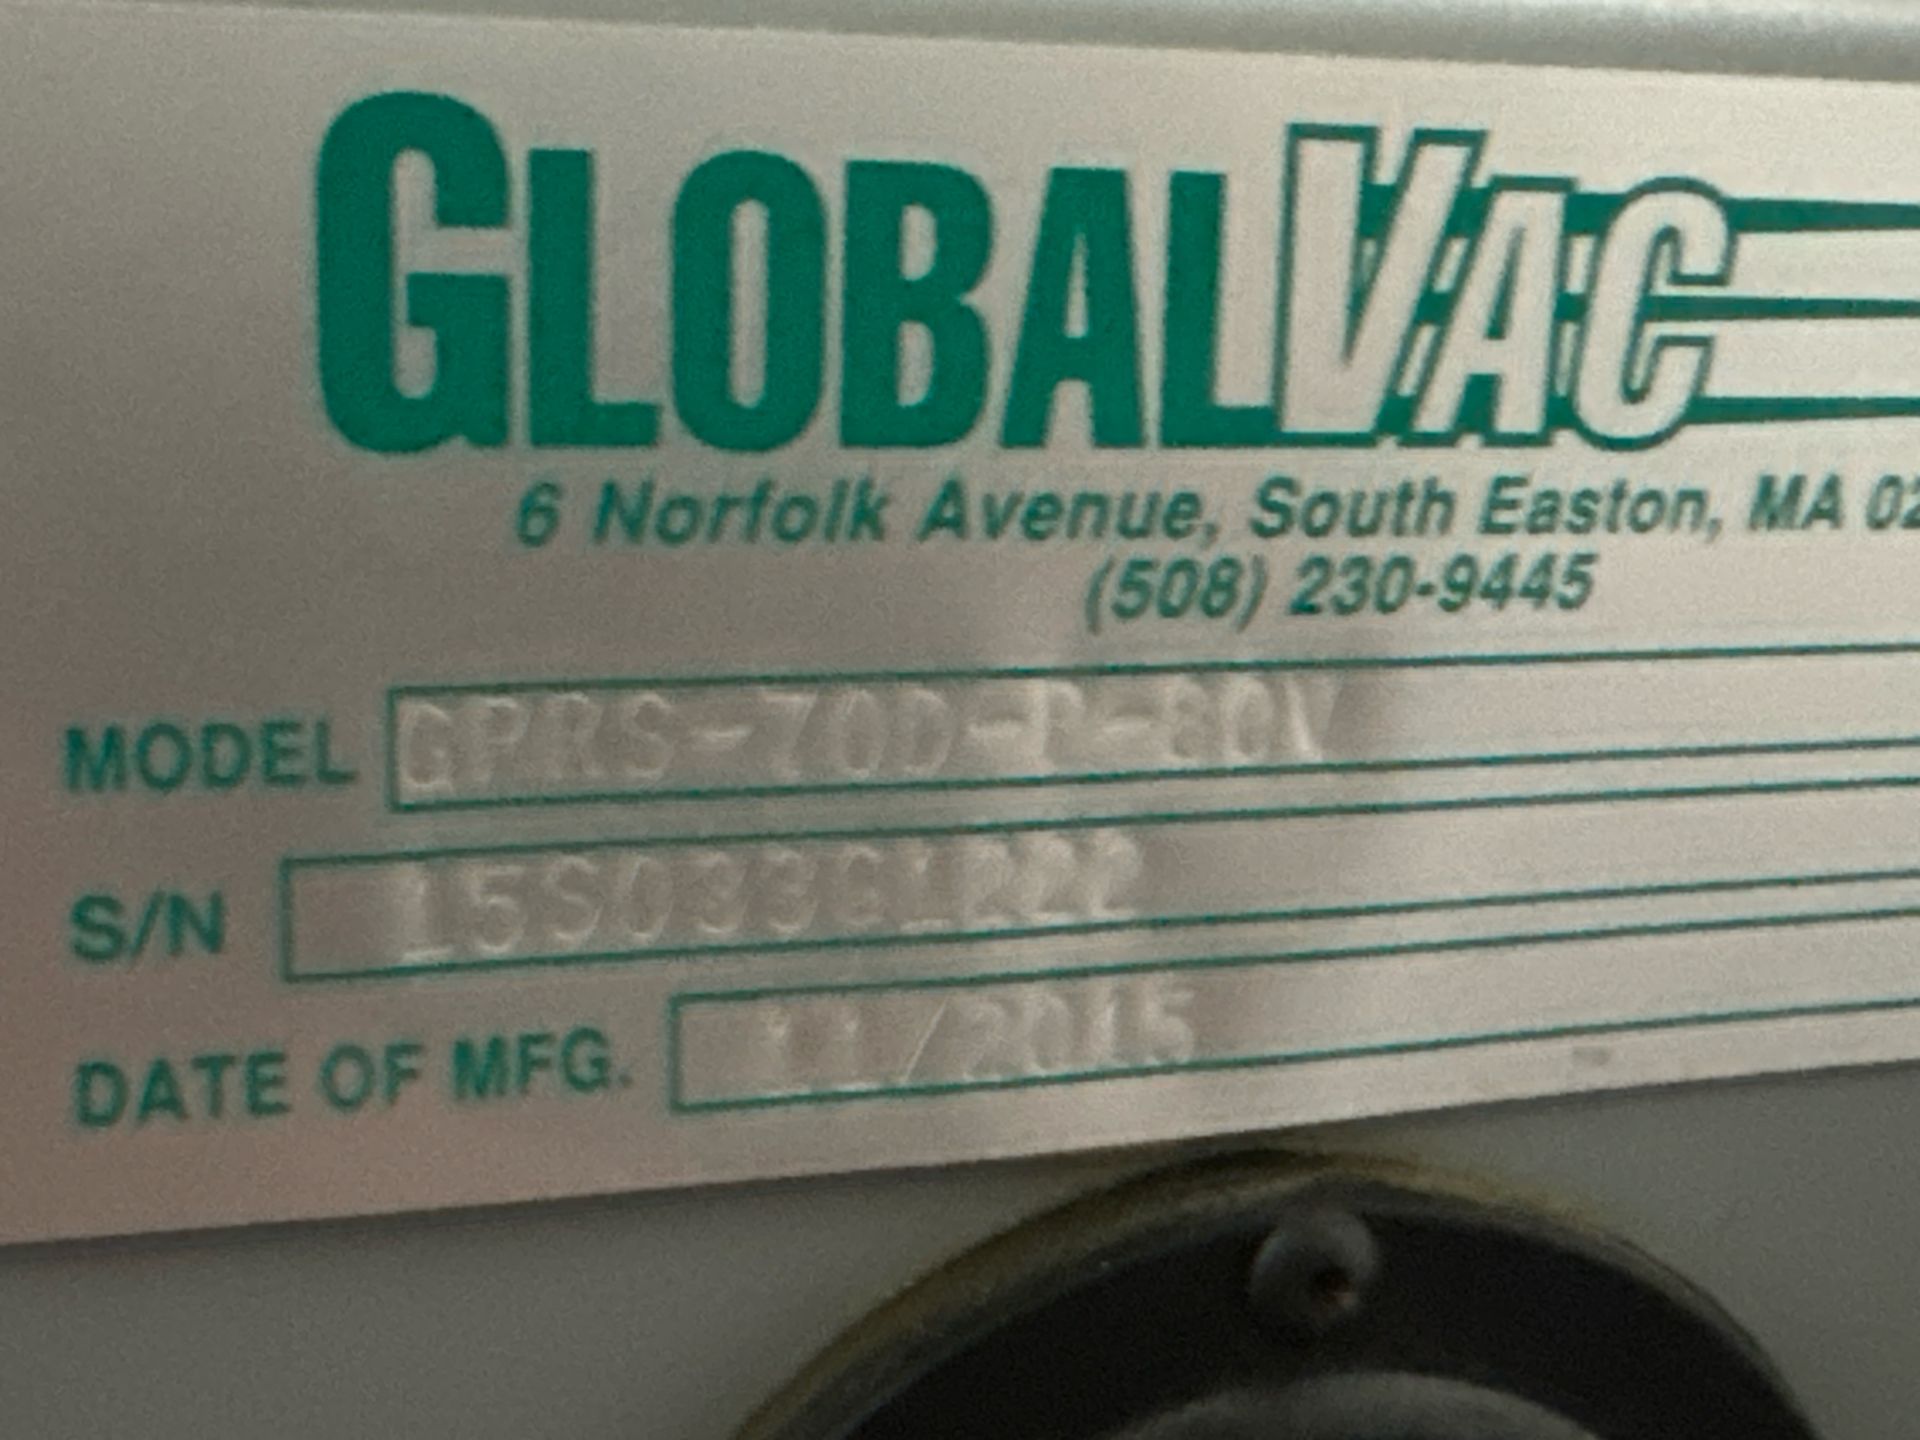 Global Vac & Air Lubricated Rotary Vane Vacuum System - Image 7 of 7